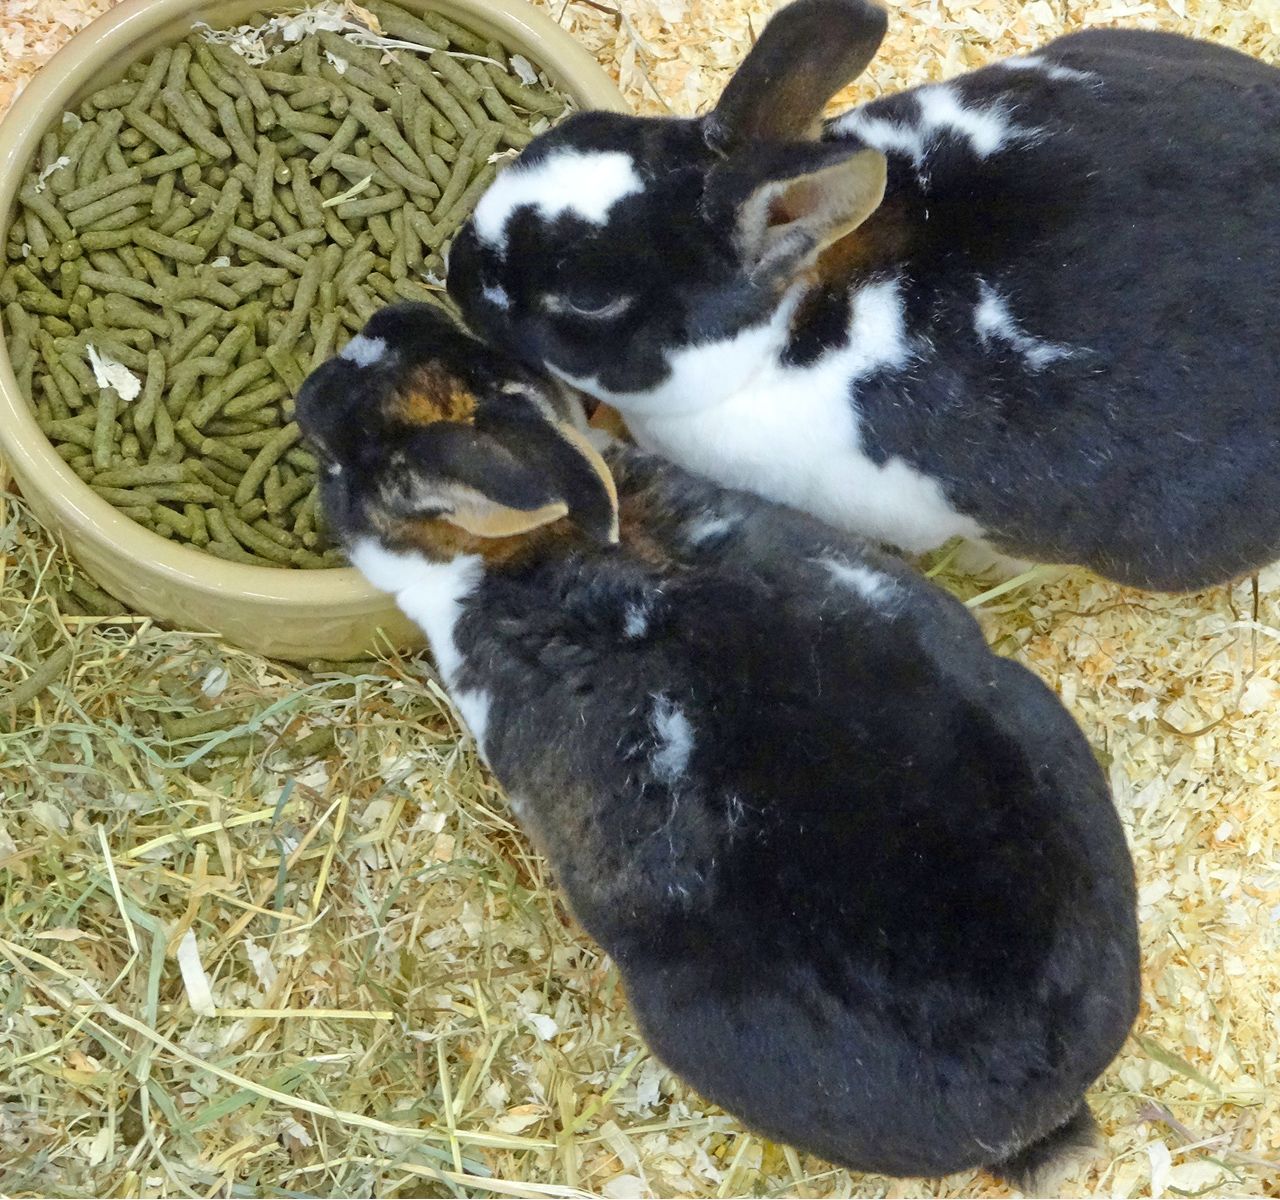 rabbit harness petsmart